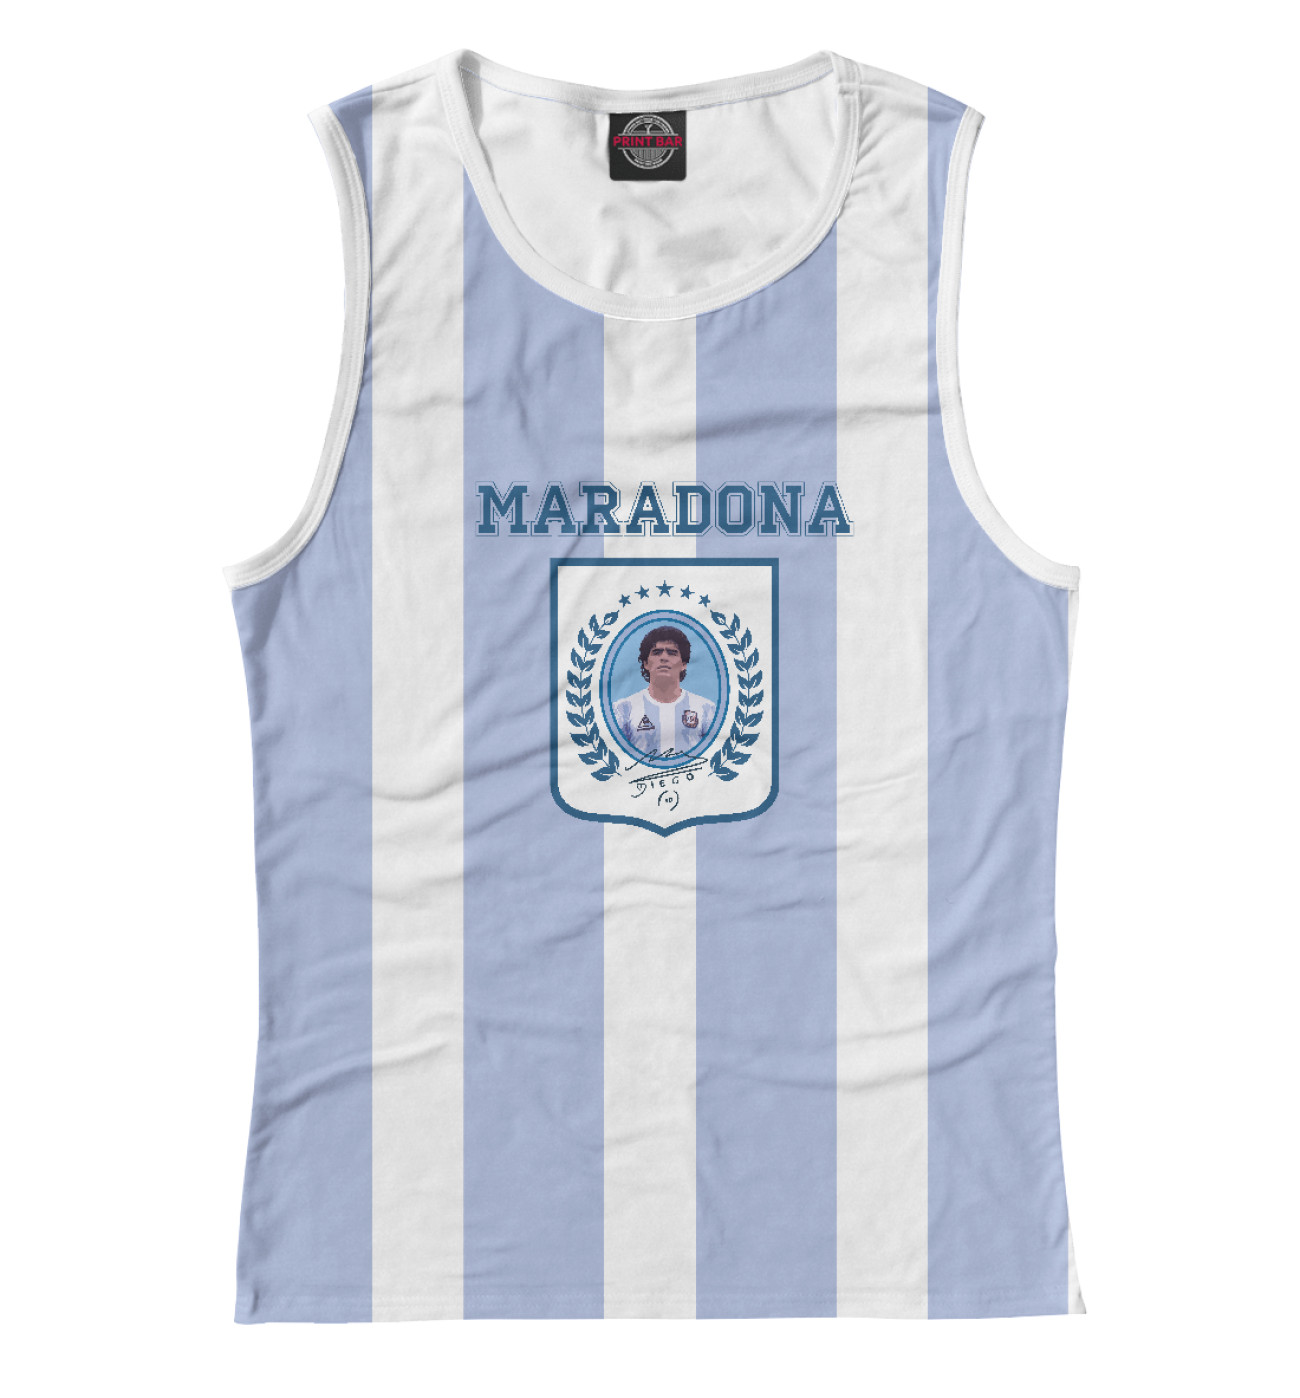 Женская Майка Maradona, артикул: FTO-660229-may-1